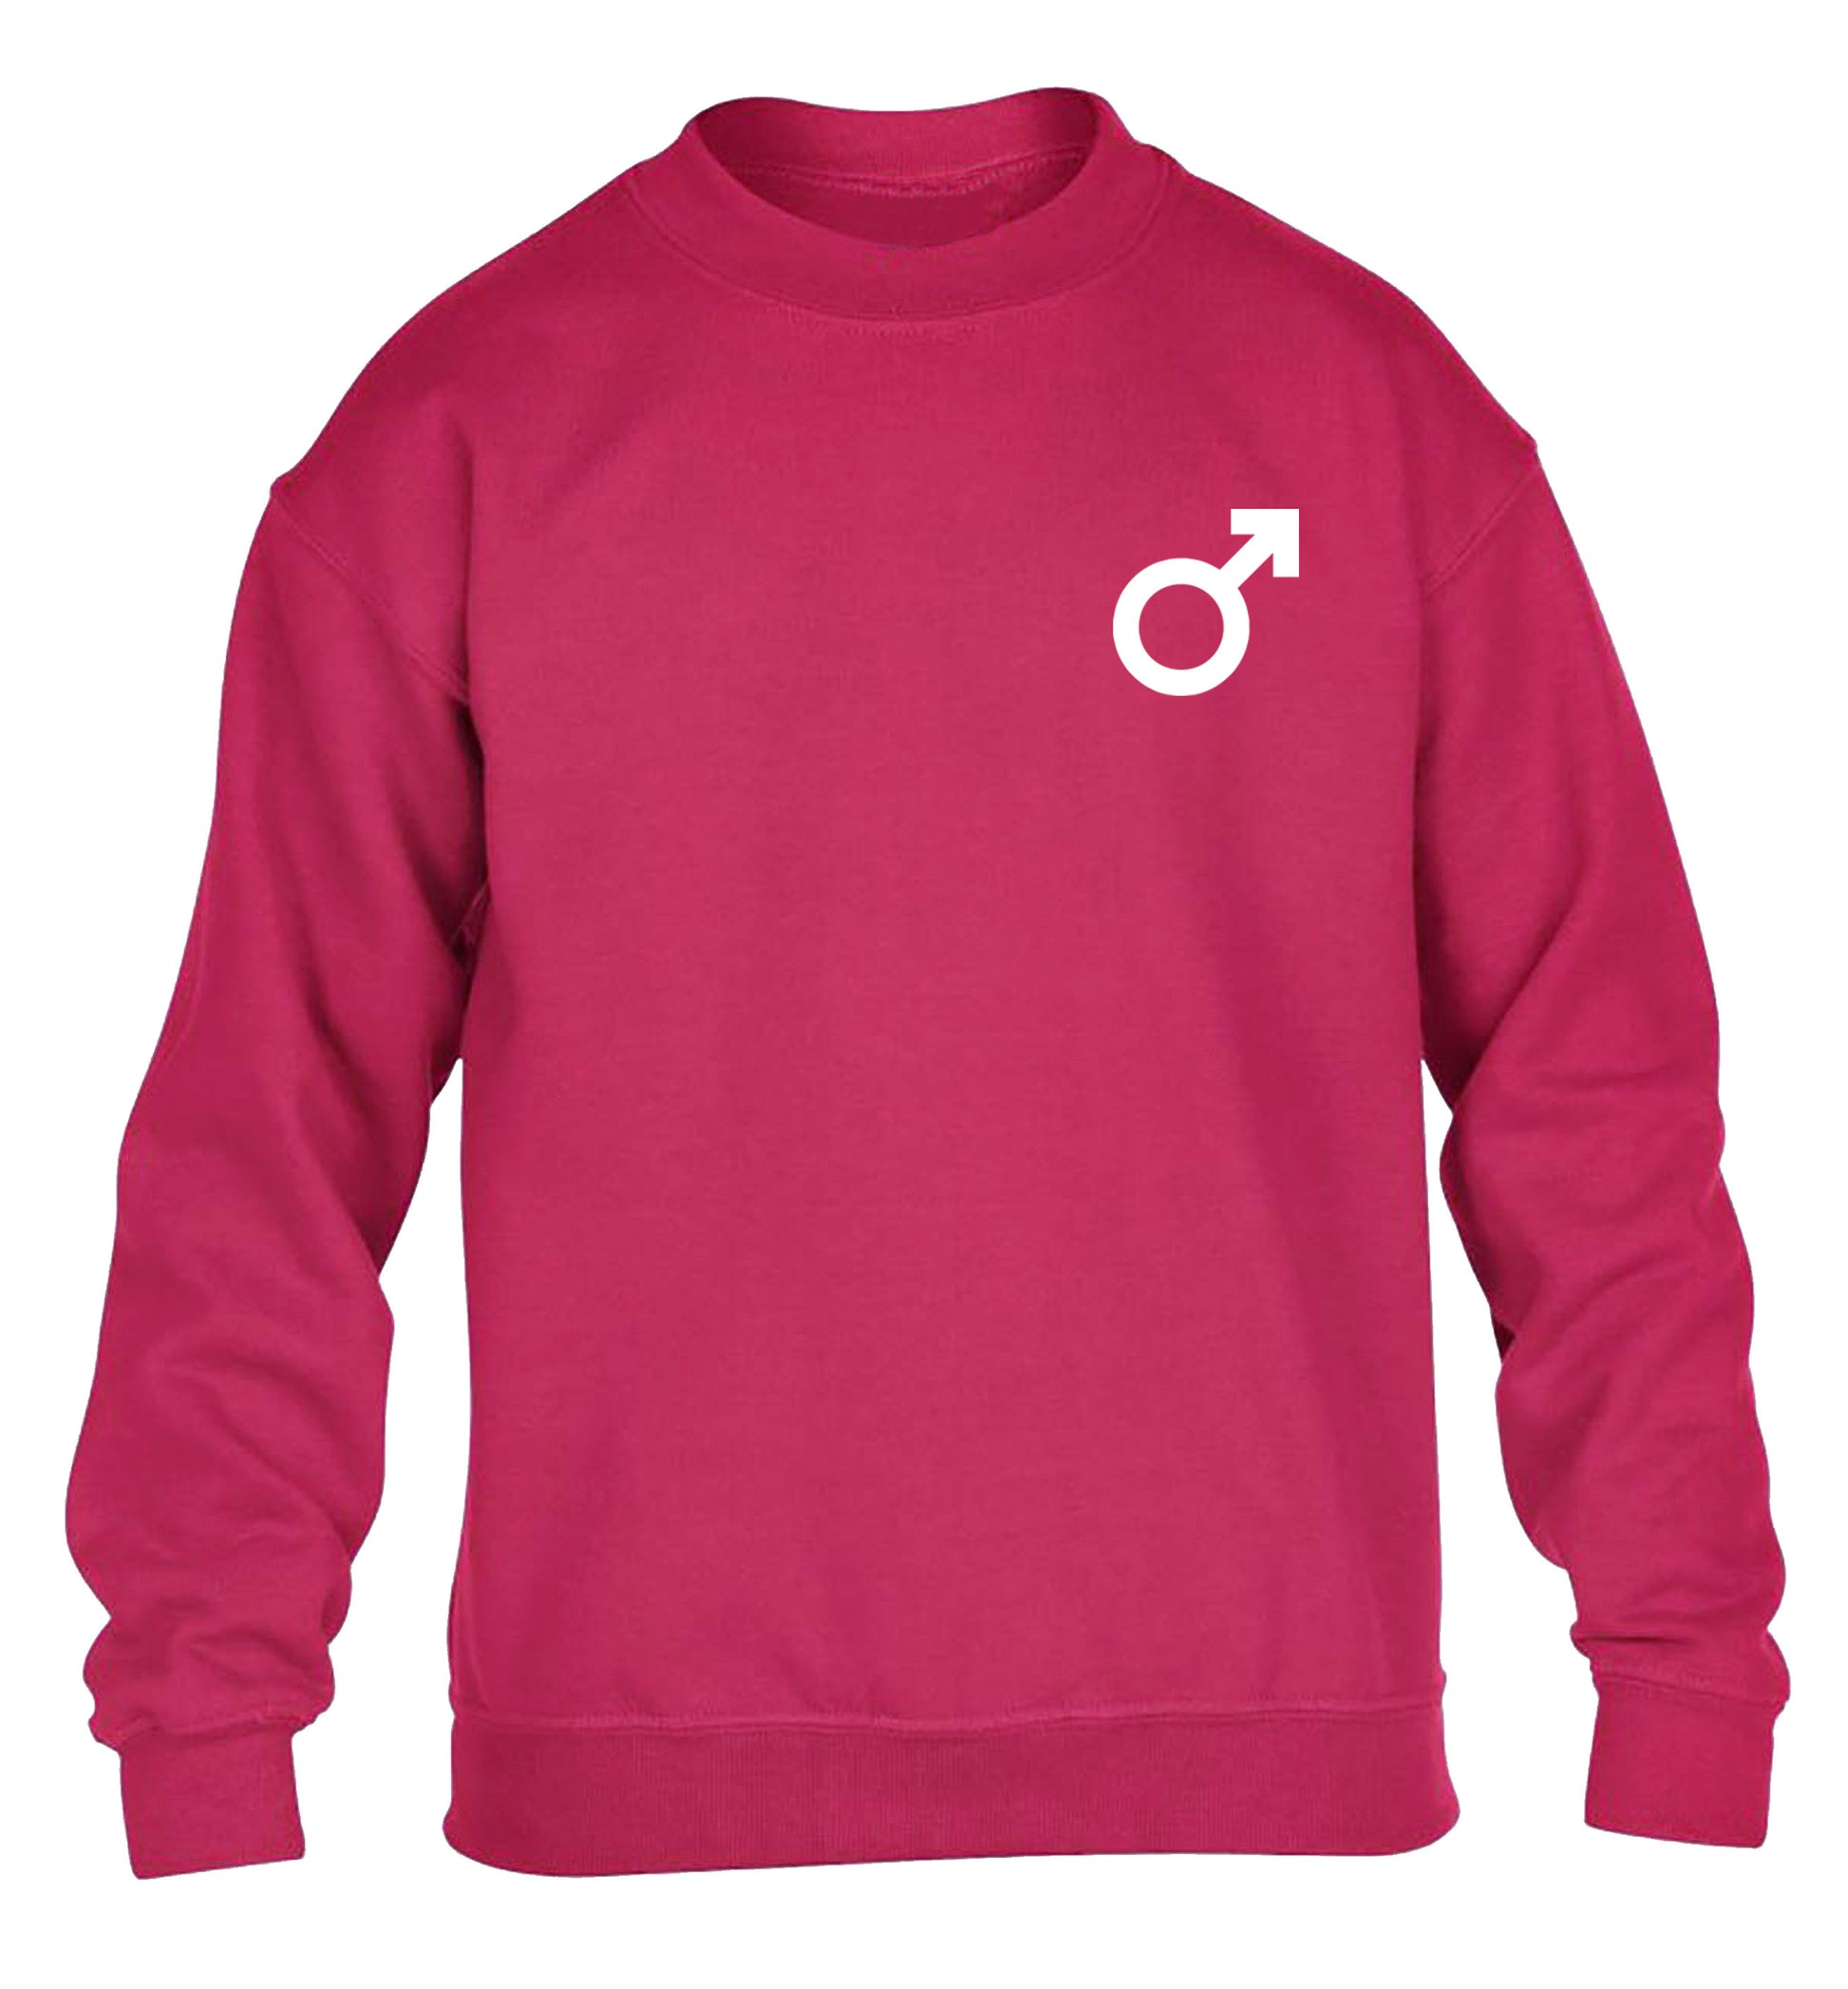 Male symbol pocket children's pink sweater 12-14 Years